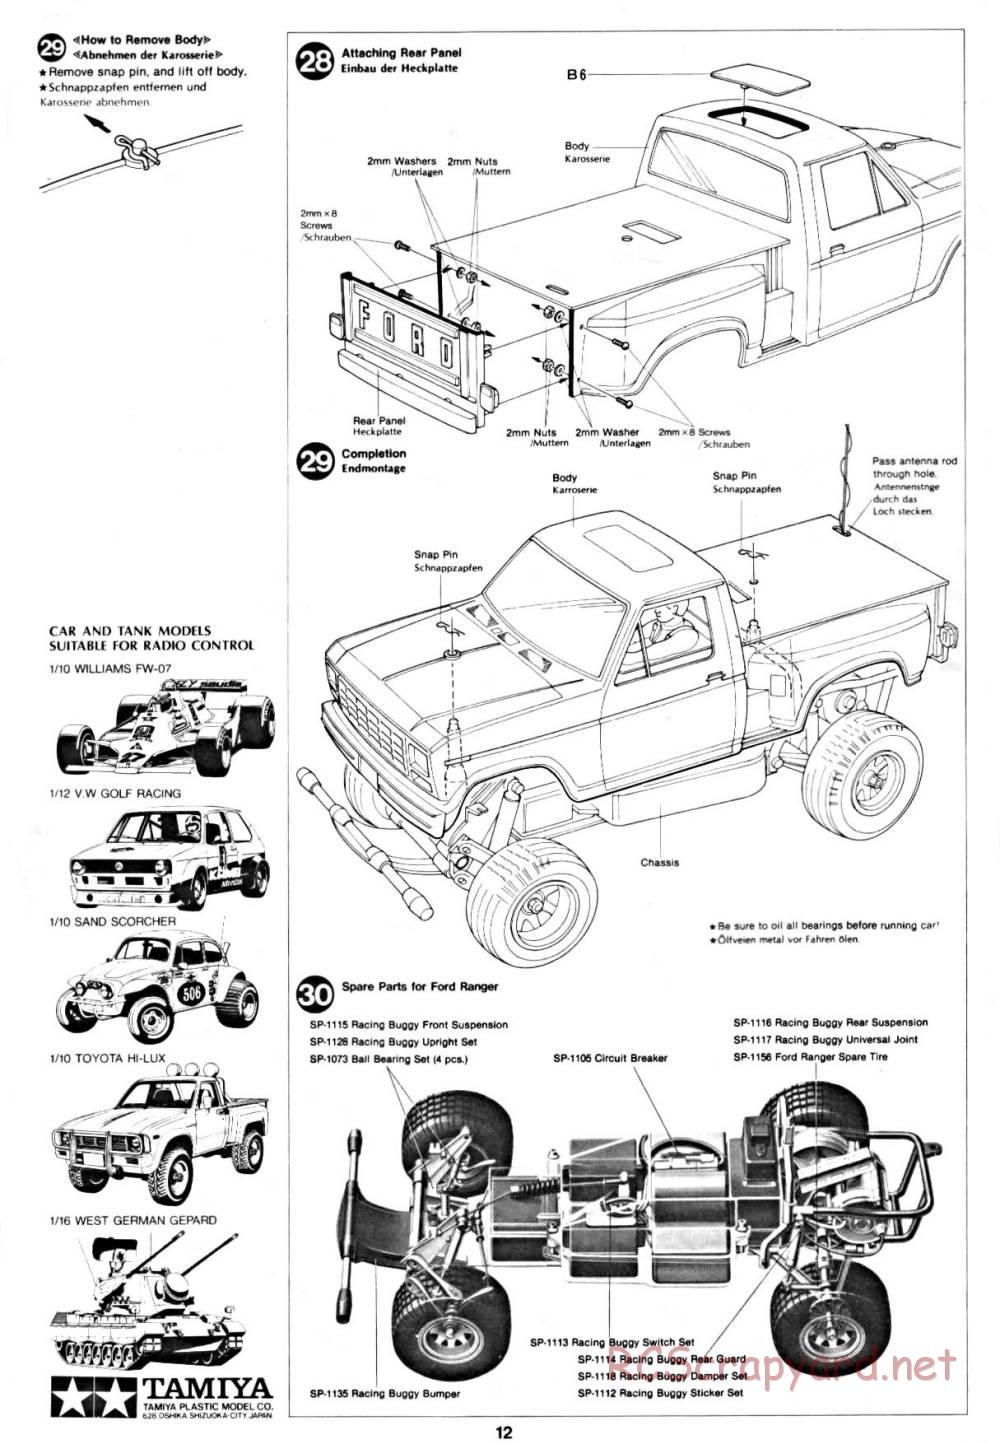 Tamiya - Ford F-150 Ranger XLT - 58027 - Manual - Page 12